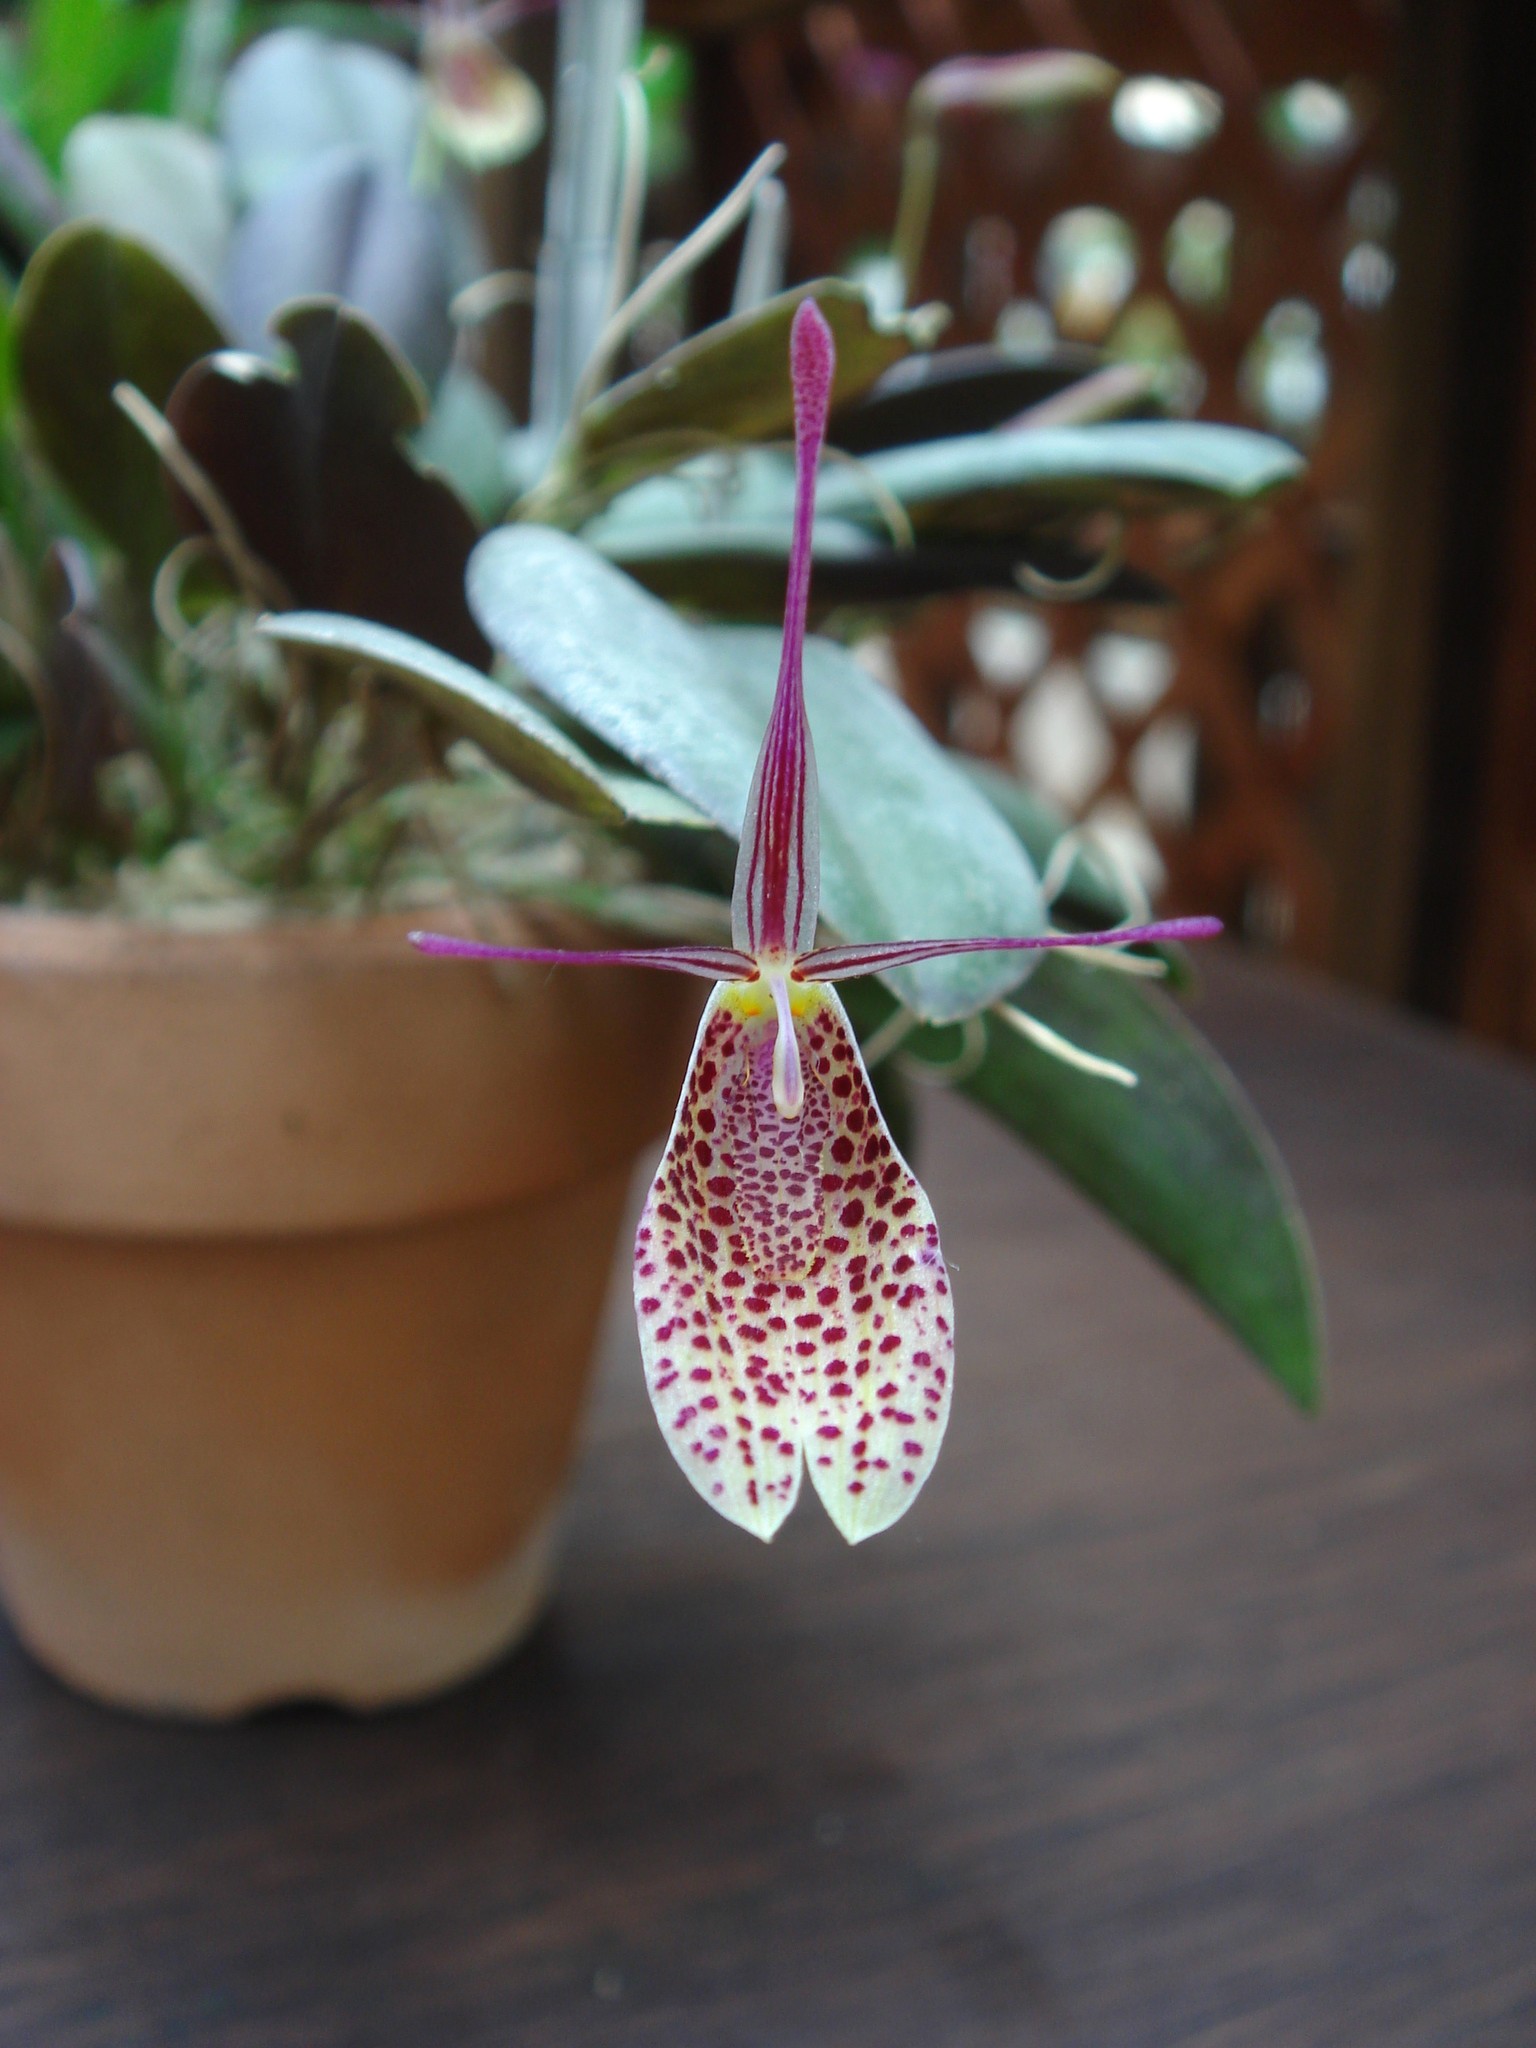 http://orchids.la.coocan.jp/Restrepia/Restrepia%20elegans/DSC03966.JPG